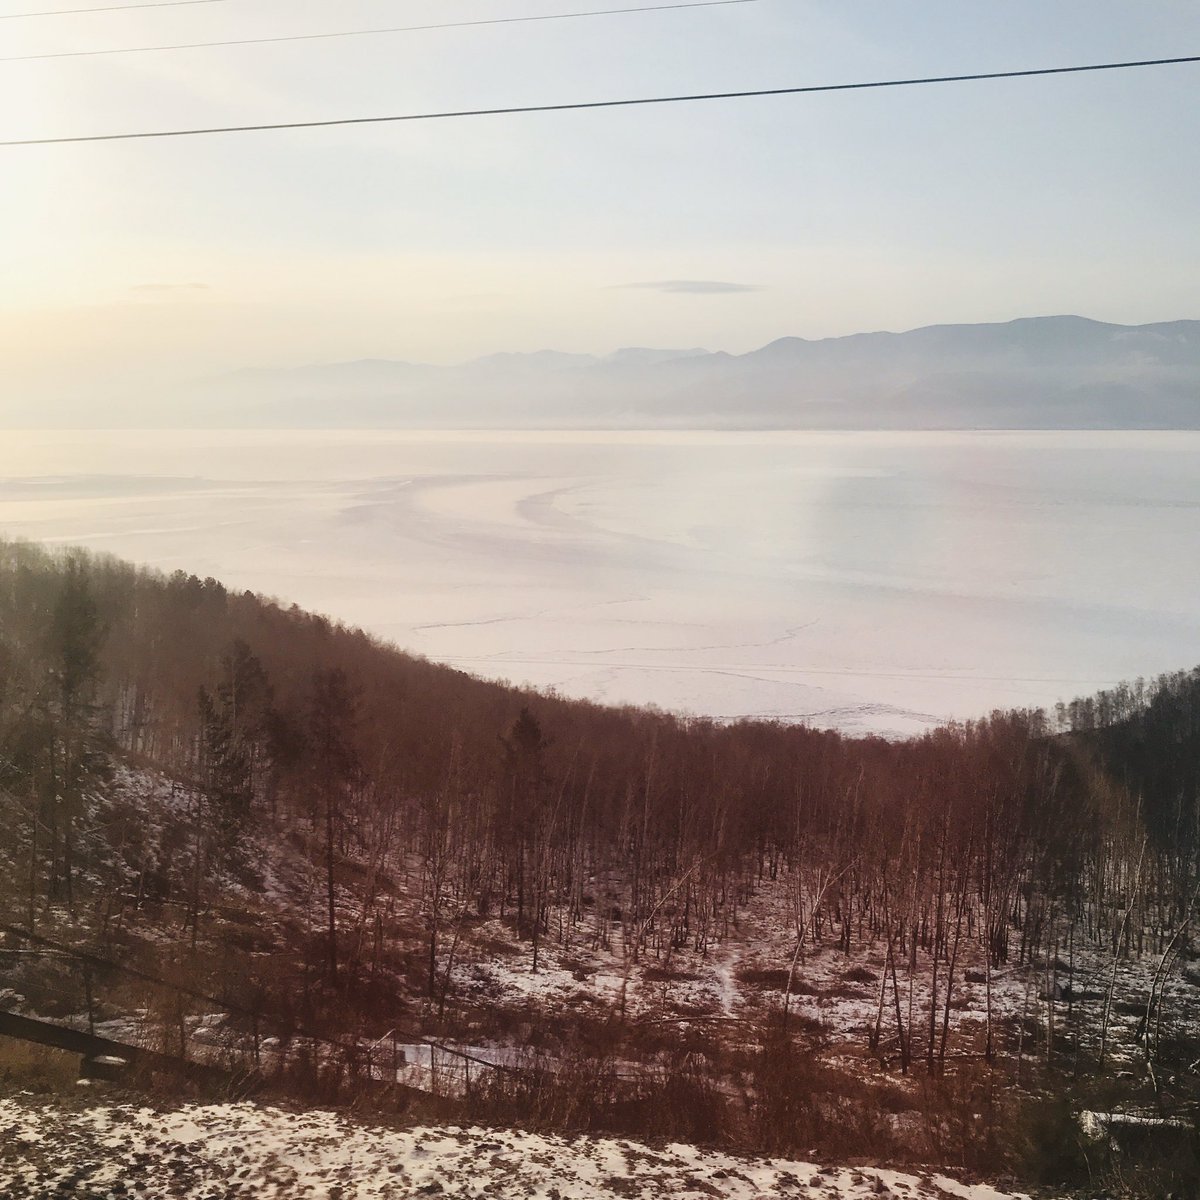 Lake Baikal from the southwest corner